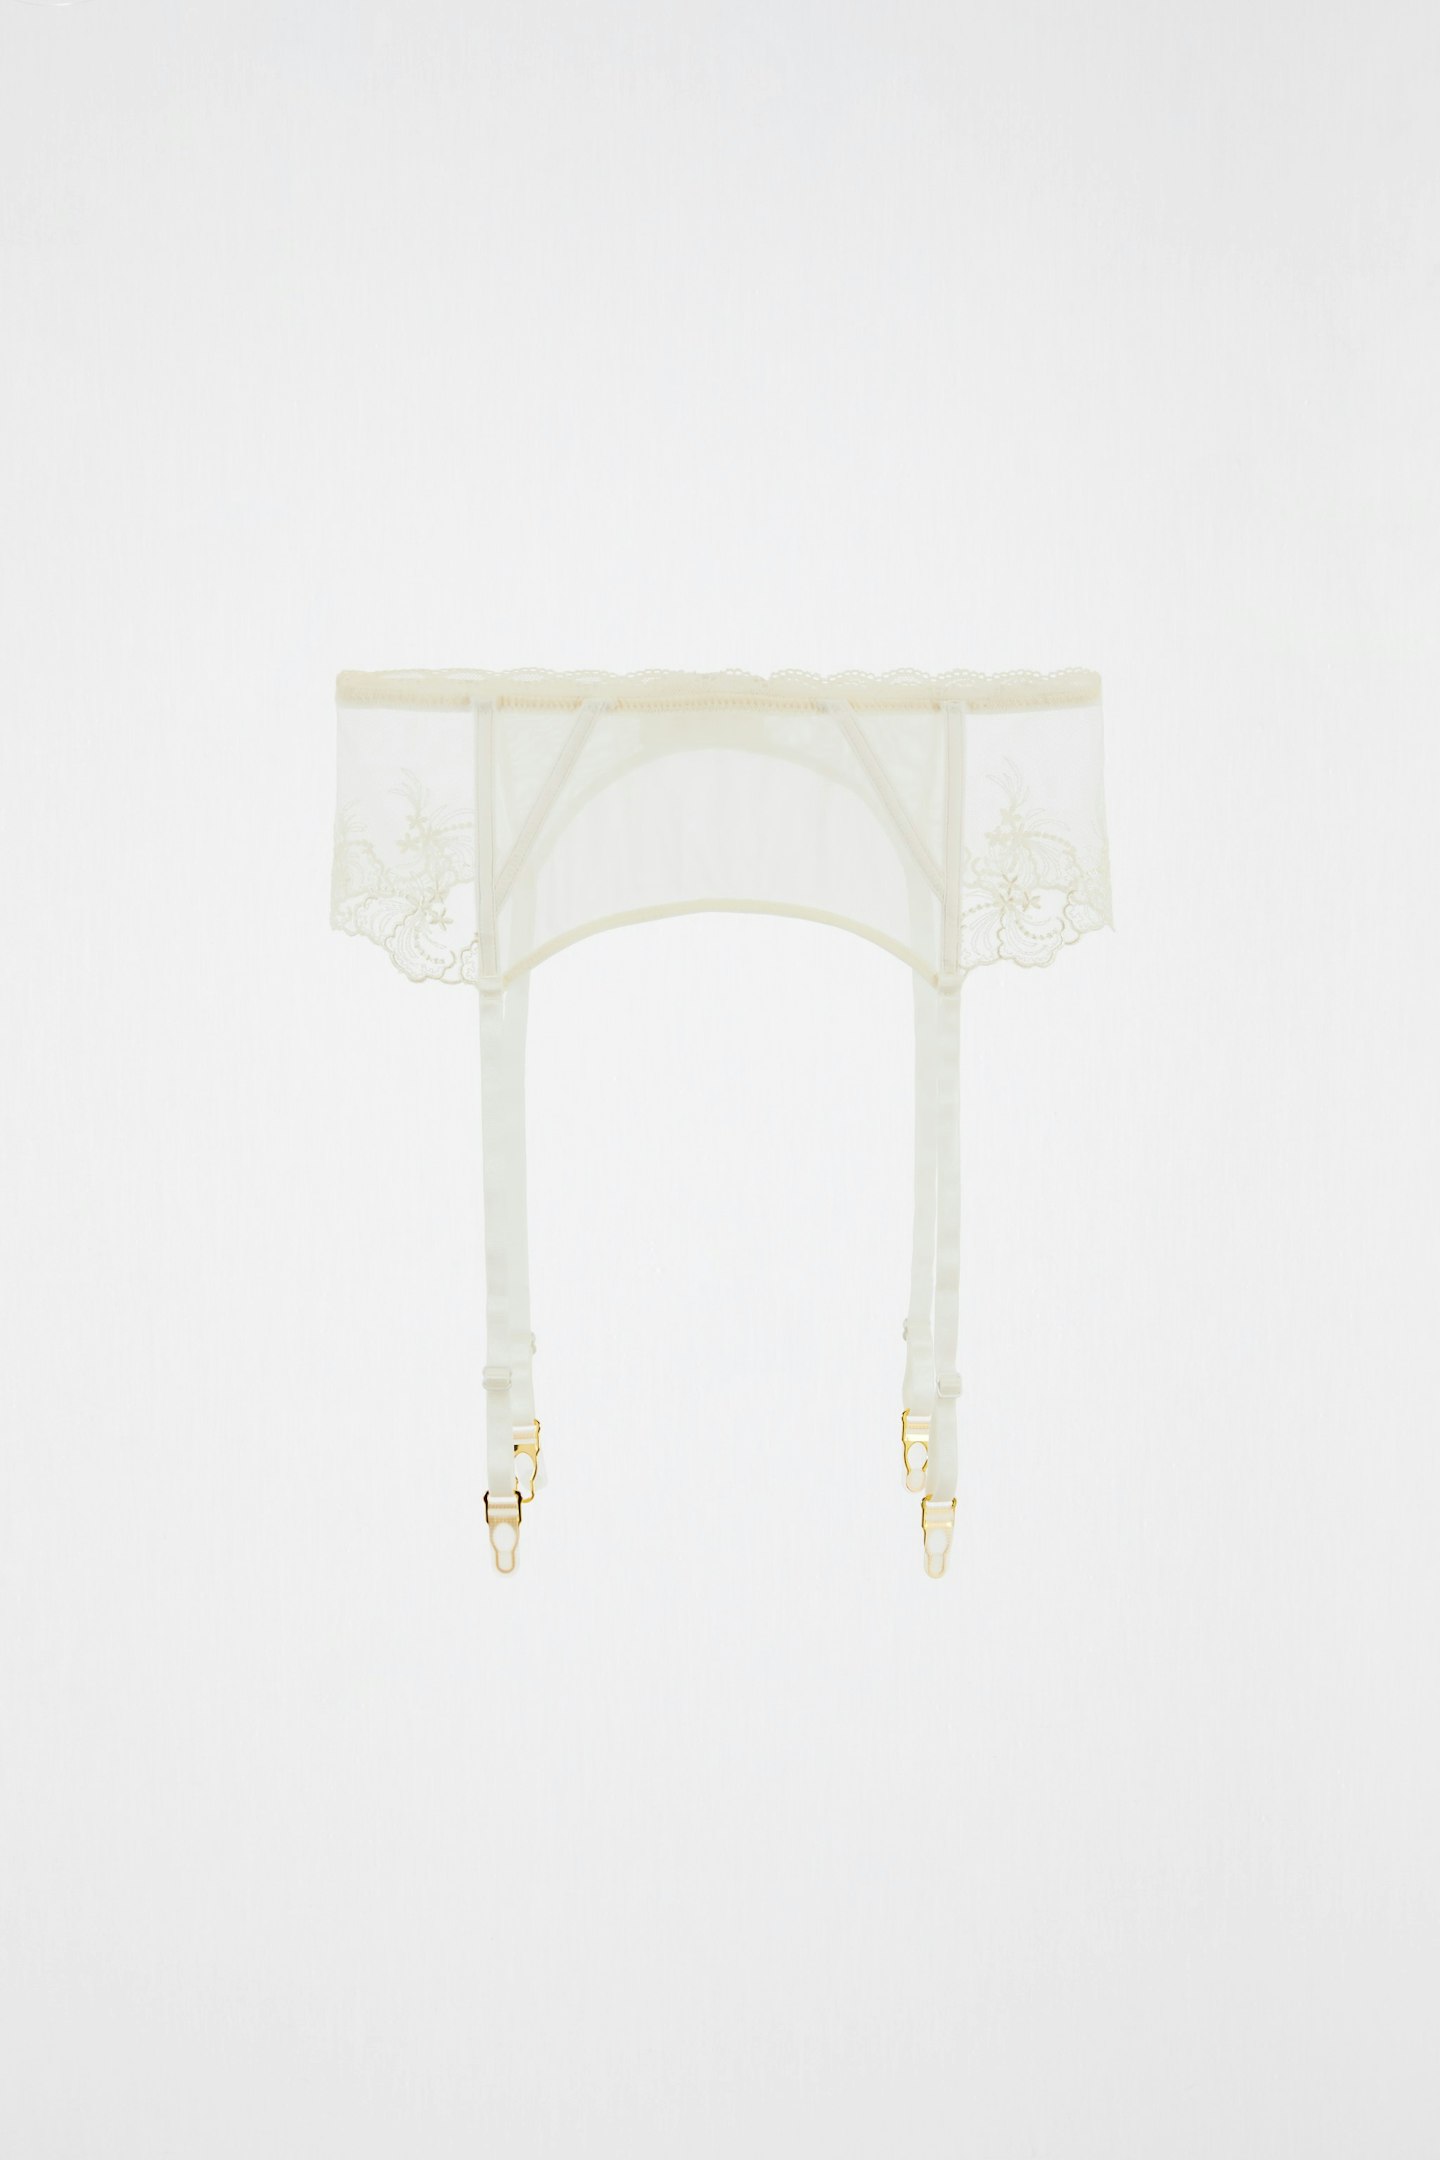 Zara, Bridal Garter Belt, £19.99